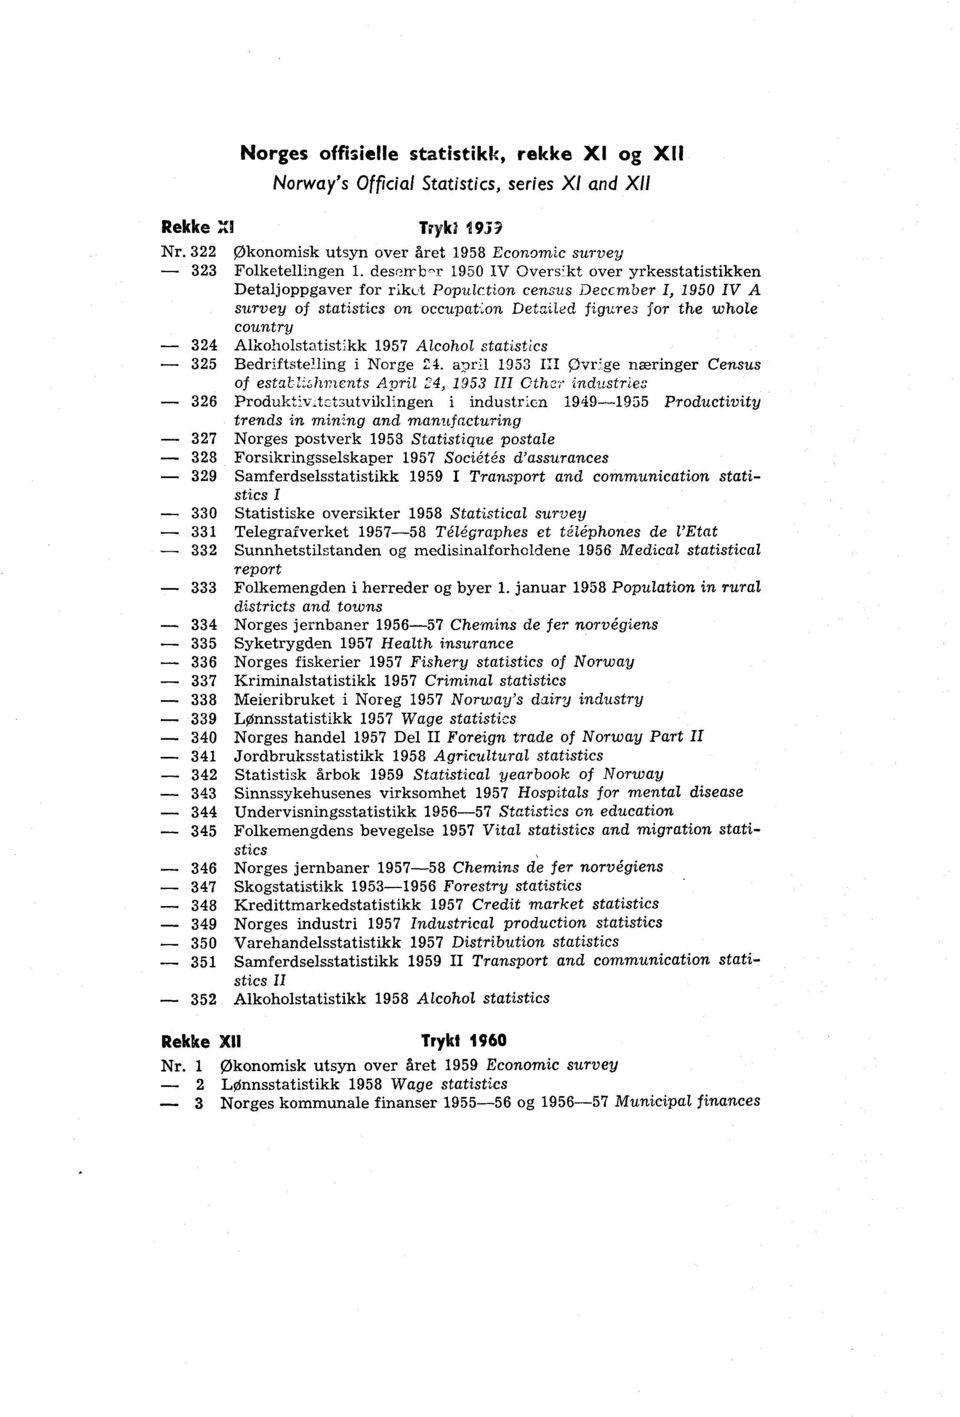 Alkoholstatistikk 1957 Alcohol statistics 325 Bedriftsteiiing i Norge 24.